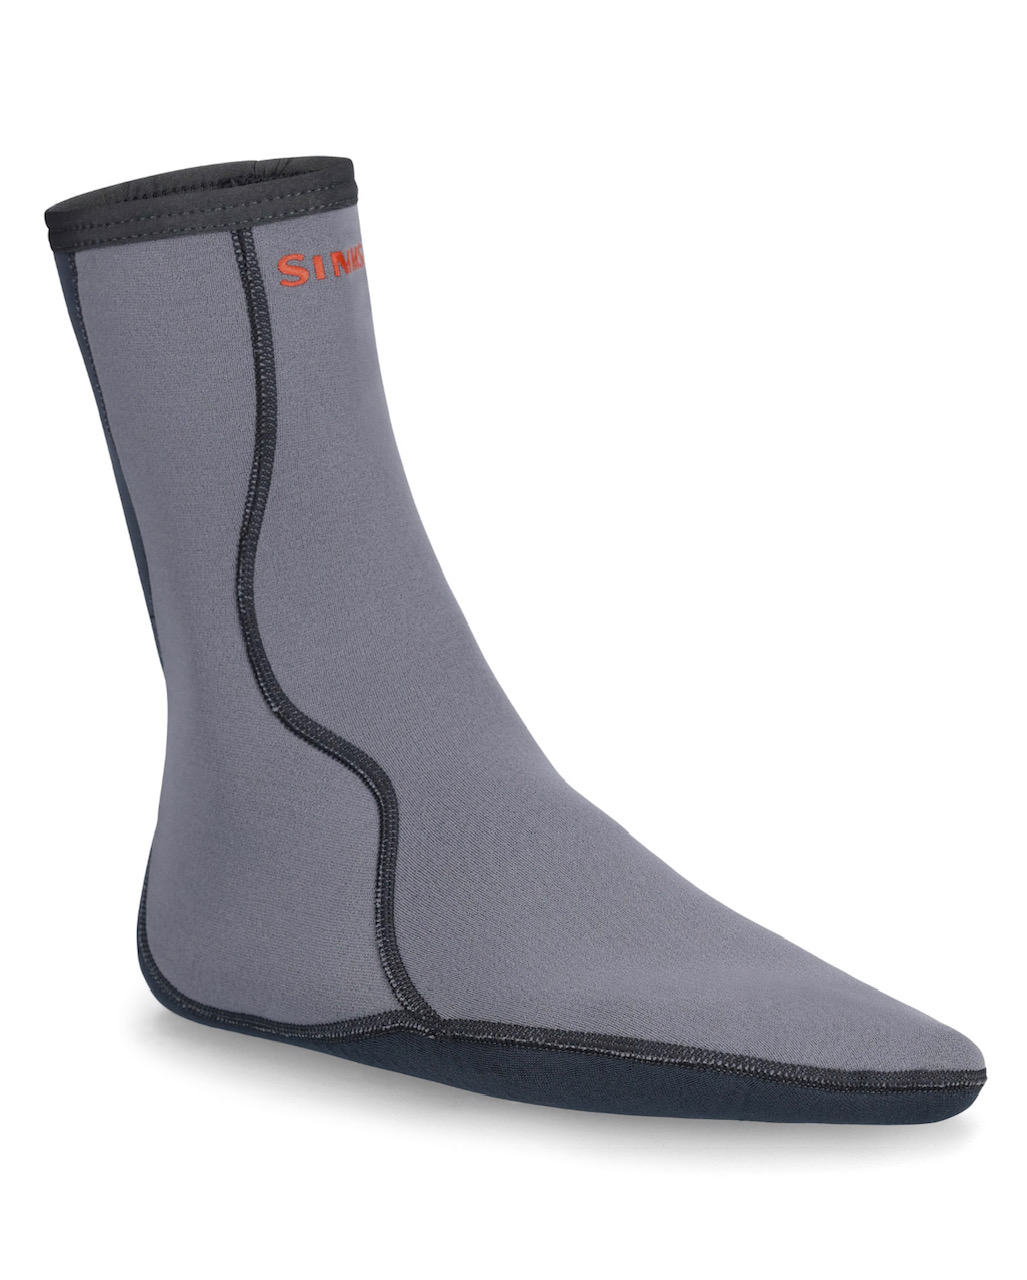 Simms M's Neoprene Wading Socks - XL